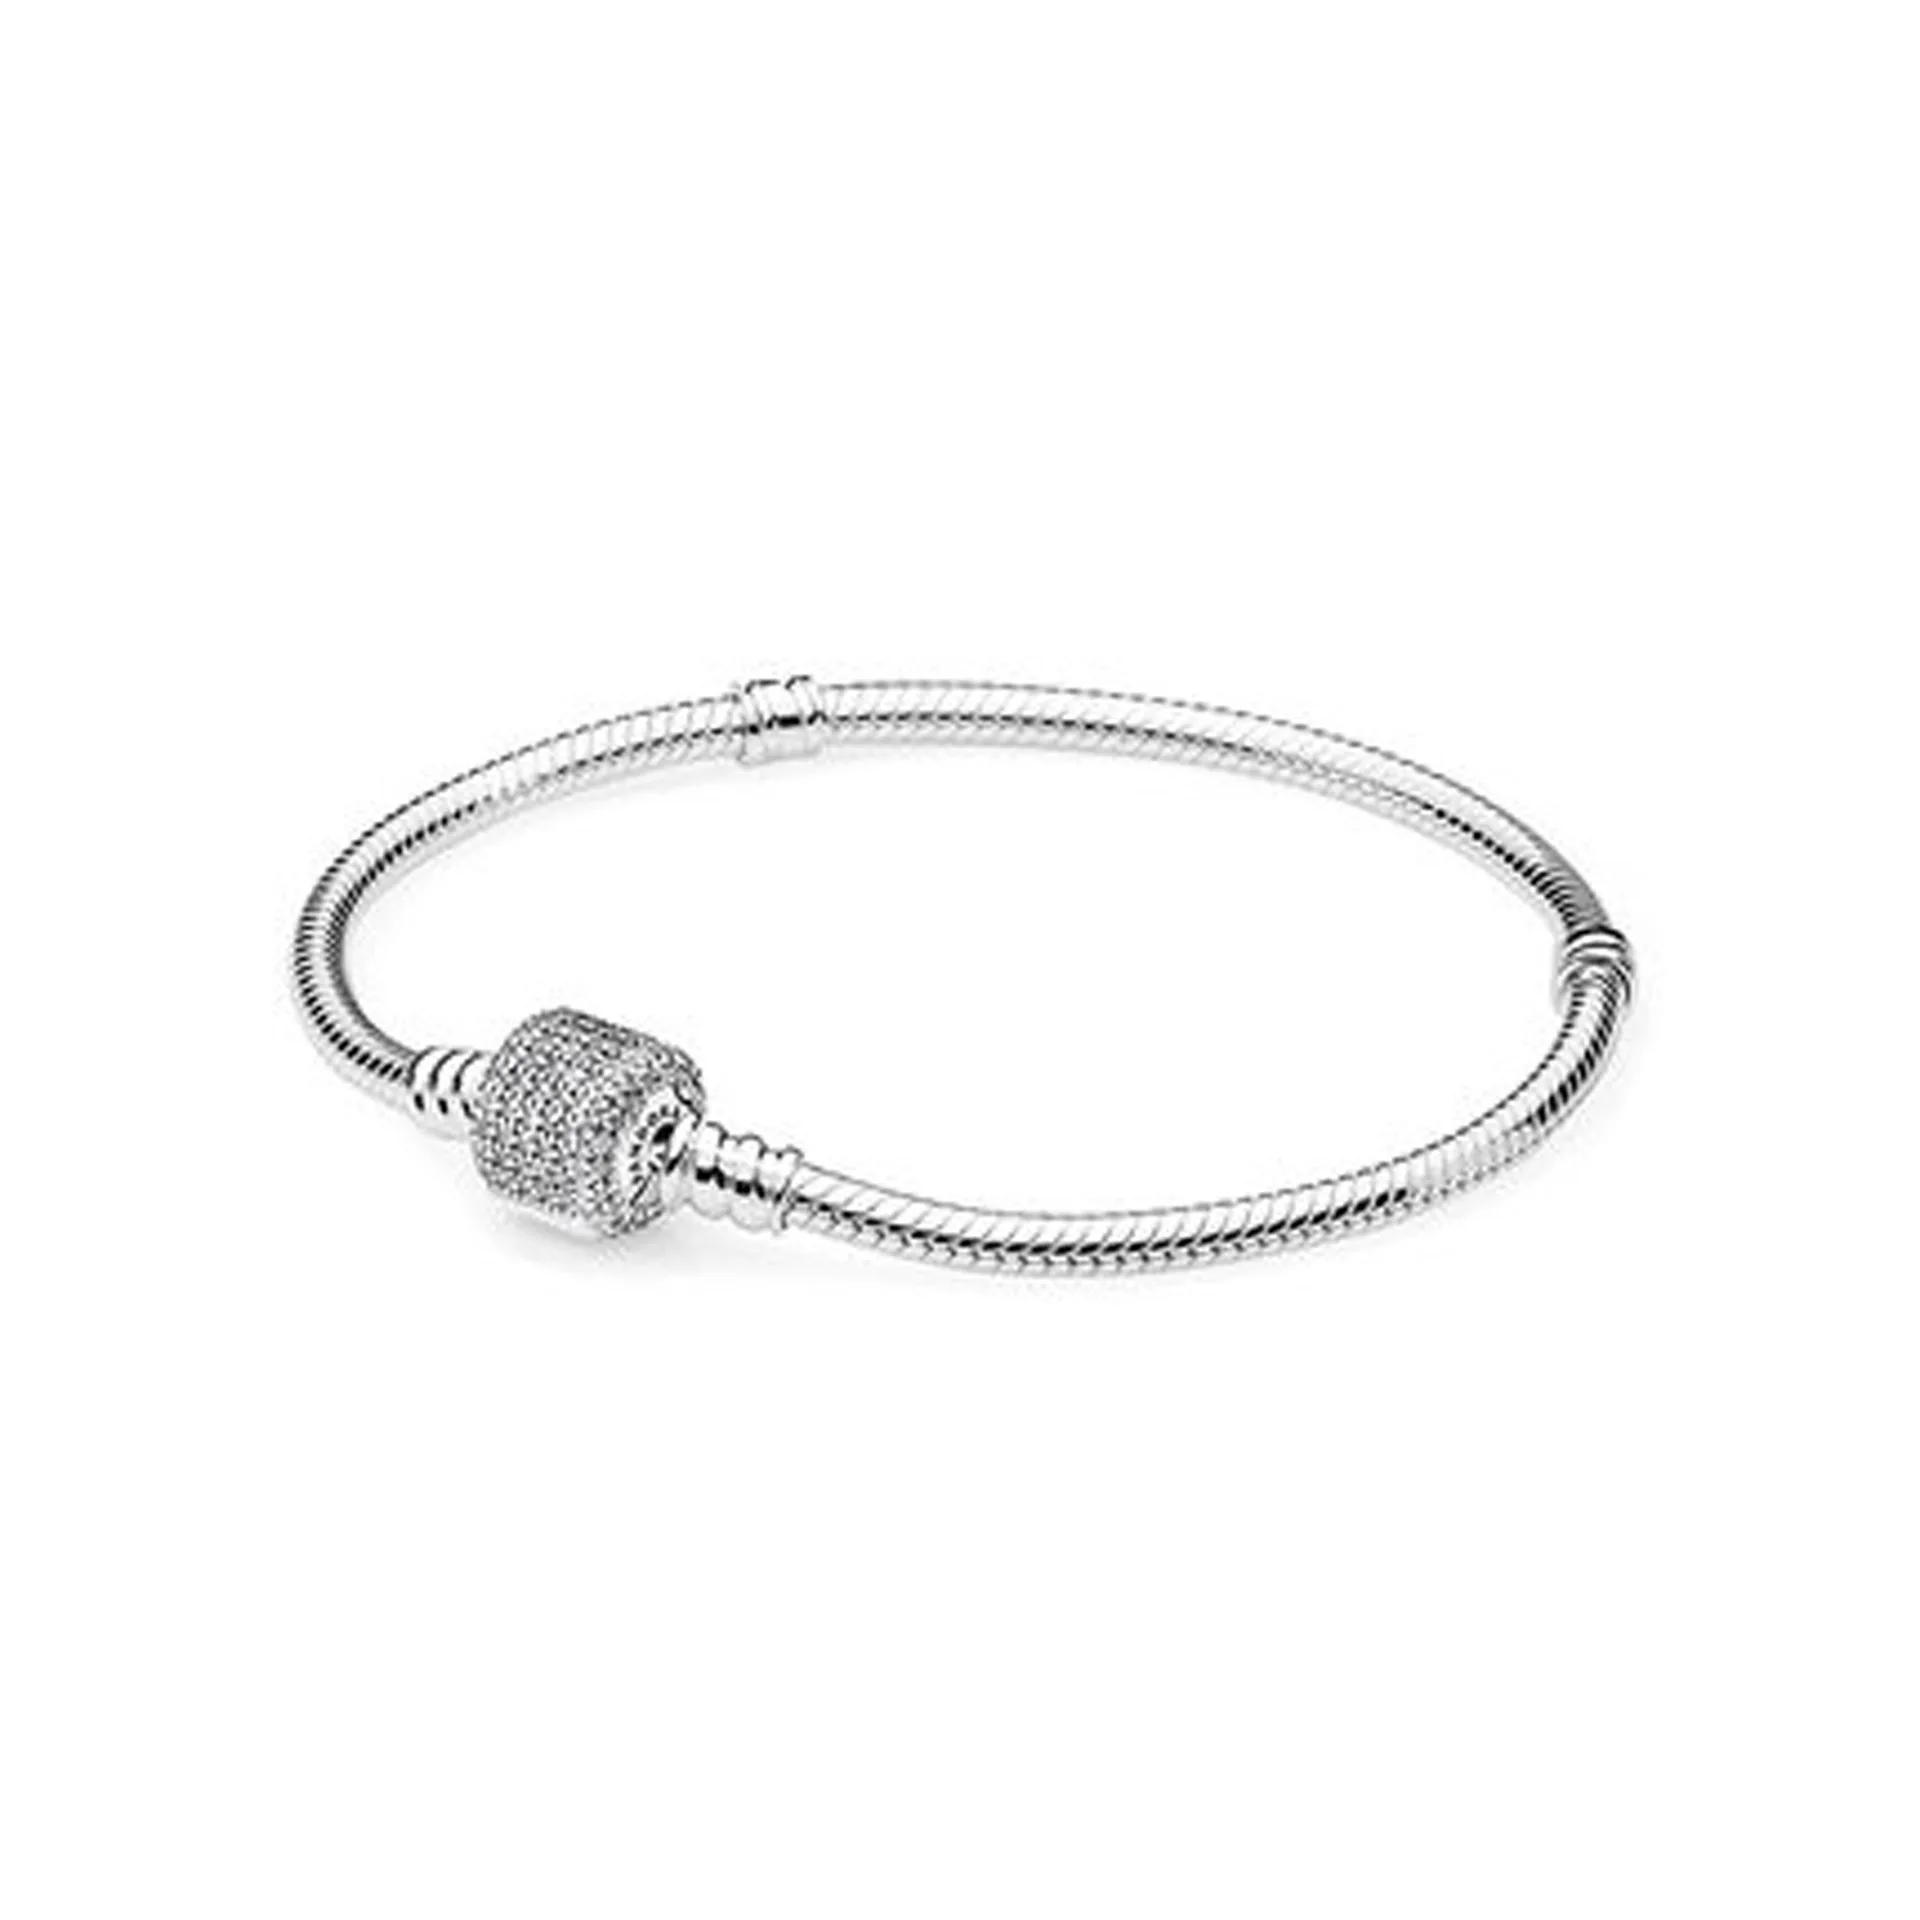 90% OFF Big Sale 925 Sterling Silver Charm Bracelets for Women Original DIY Jewelry Bone Bracelet Bangle Making Gift